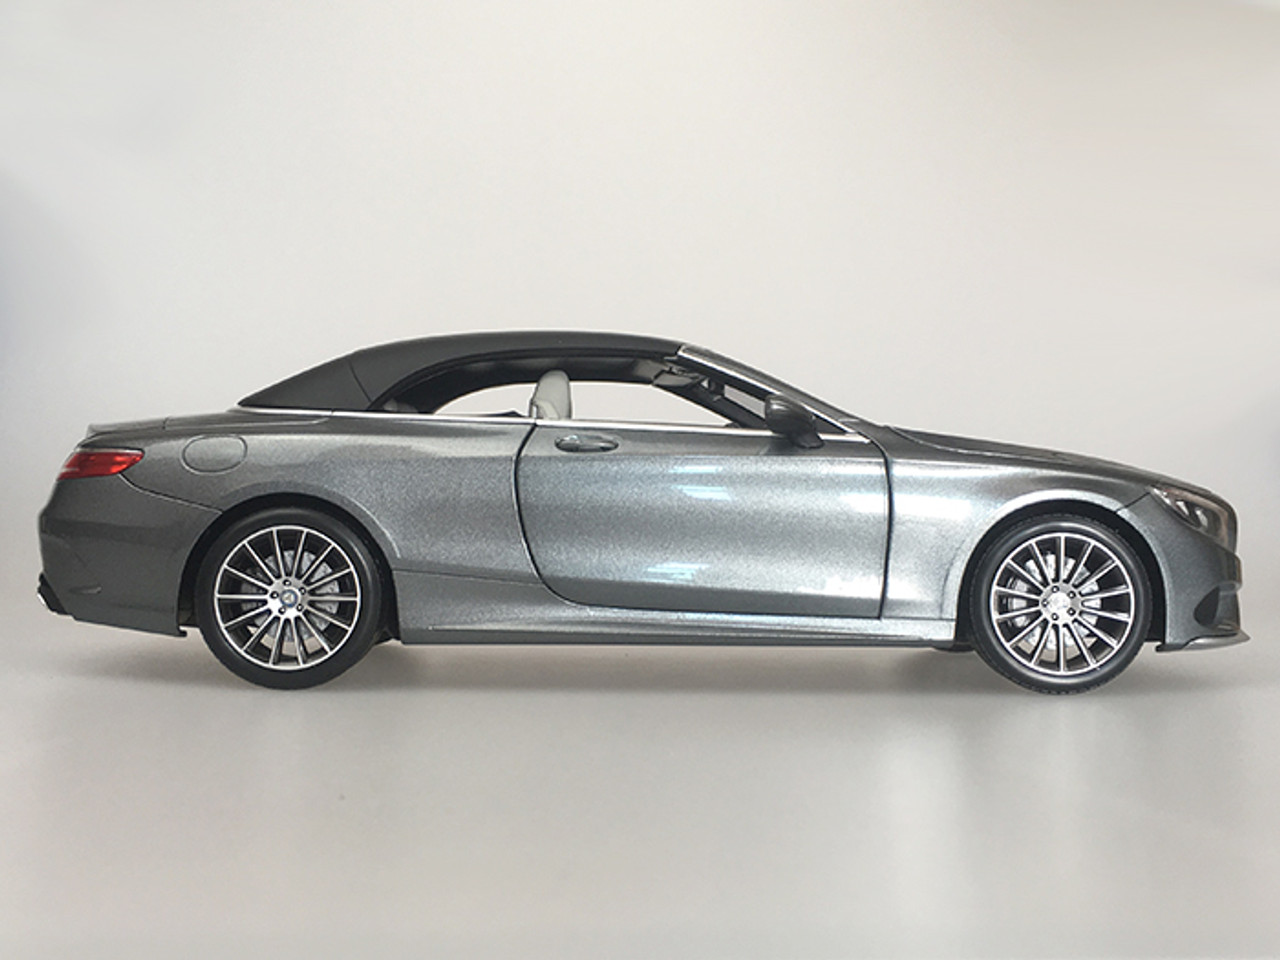 1/18 Norev Mercedes-Benz Mercedes S-Class S-Klasse Coupe Convertible (Grey) Diecast Car Model